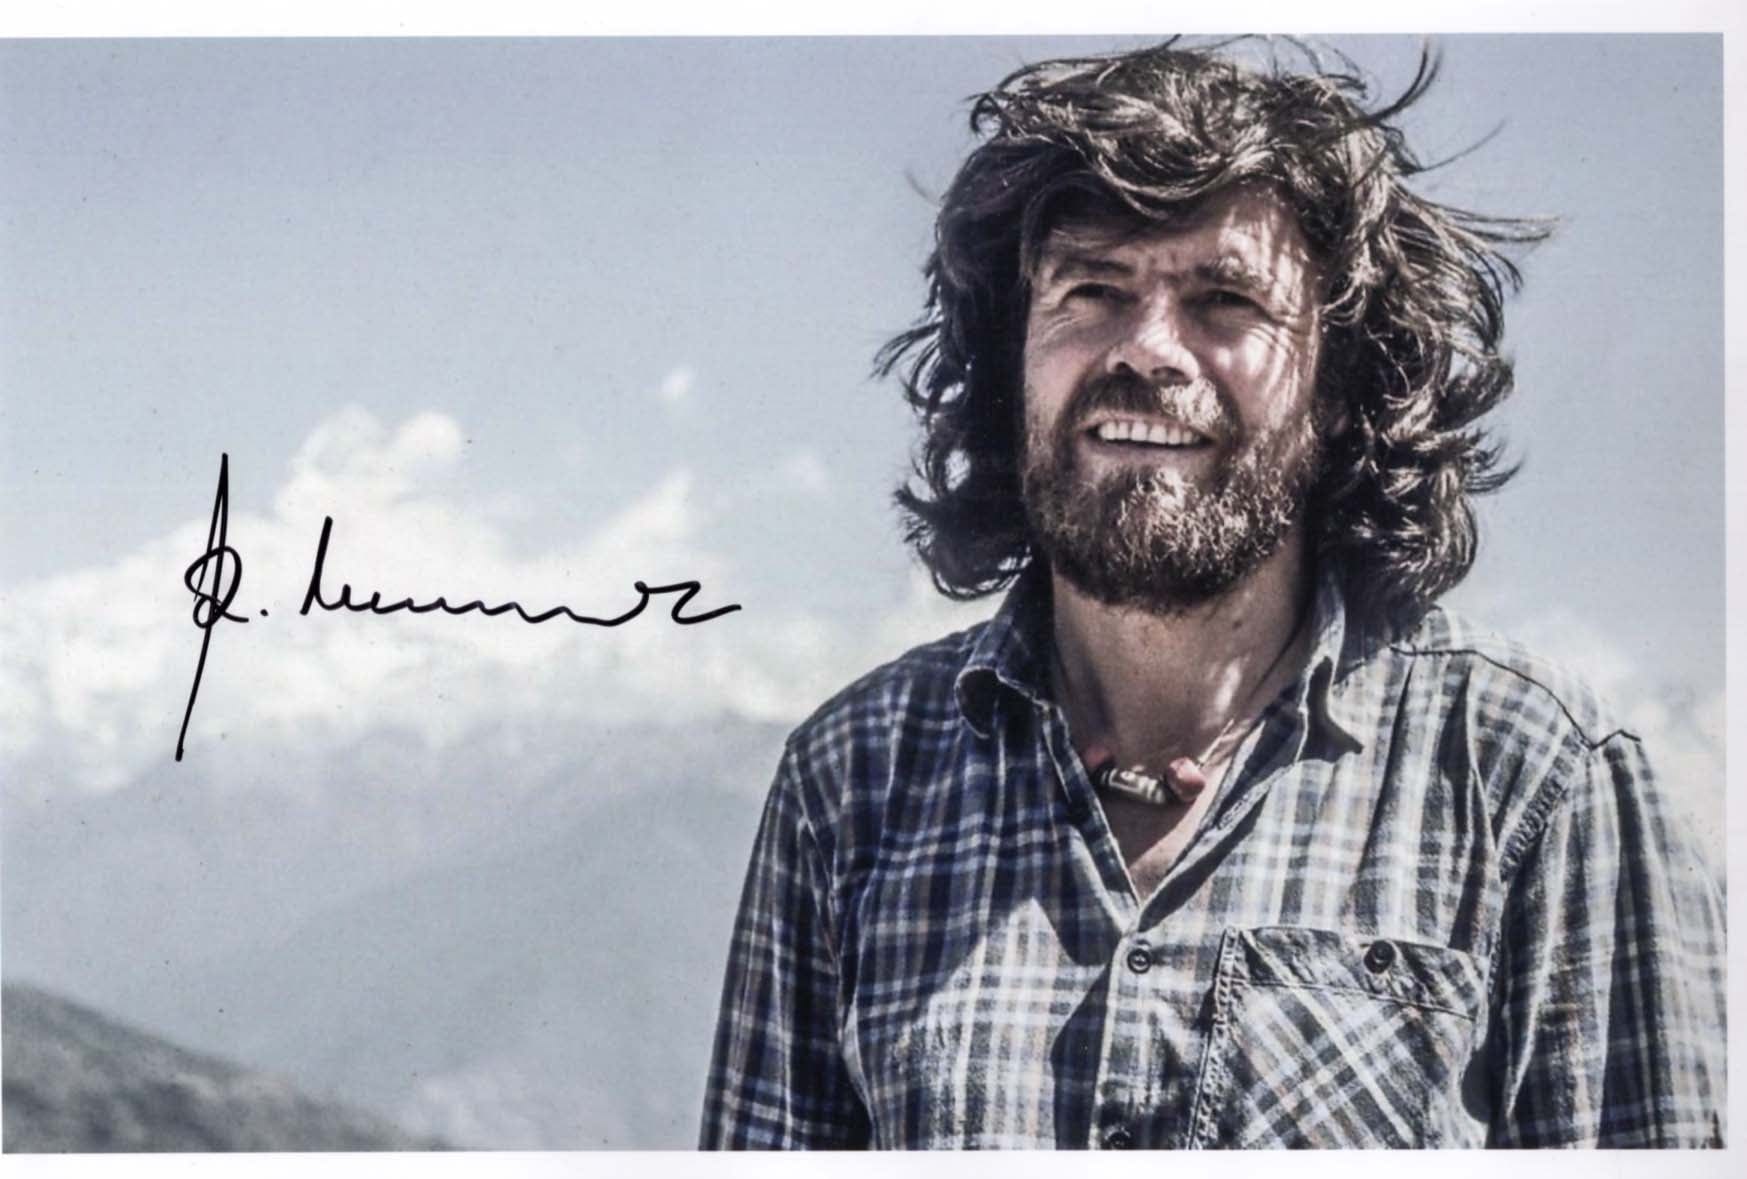 Reinhold Messner Autograph Autogramm | ID 8013030457493